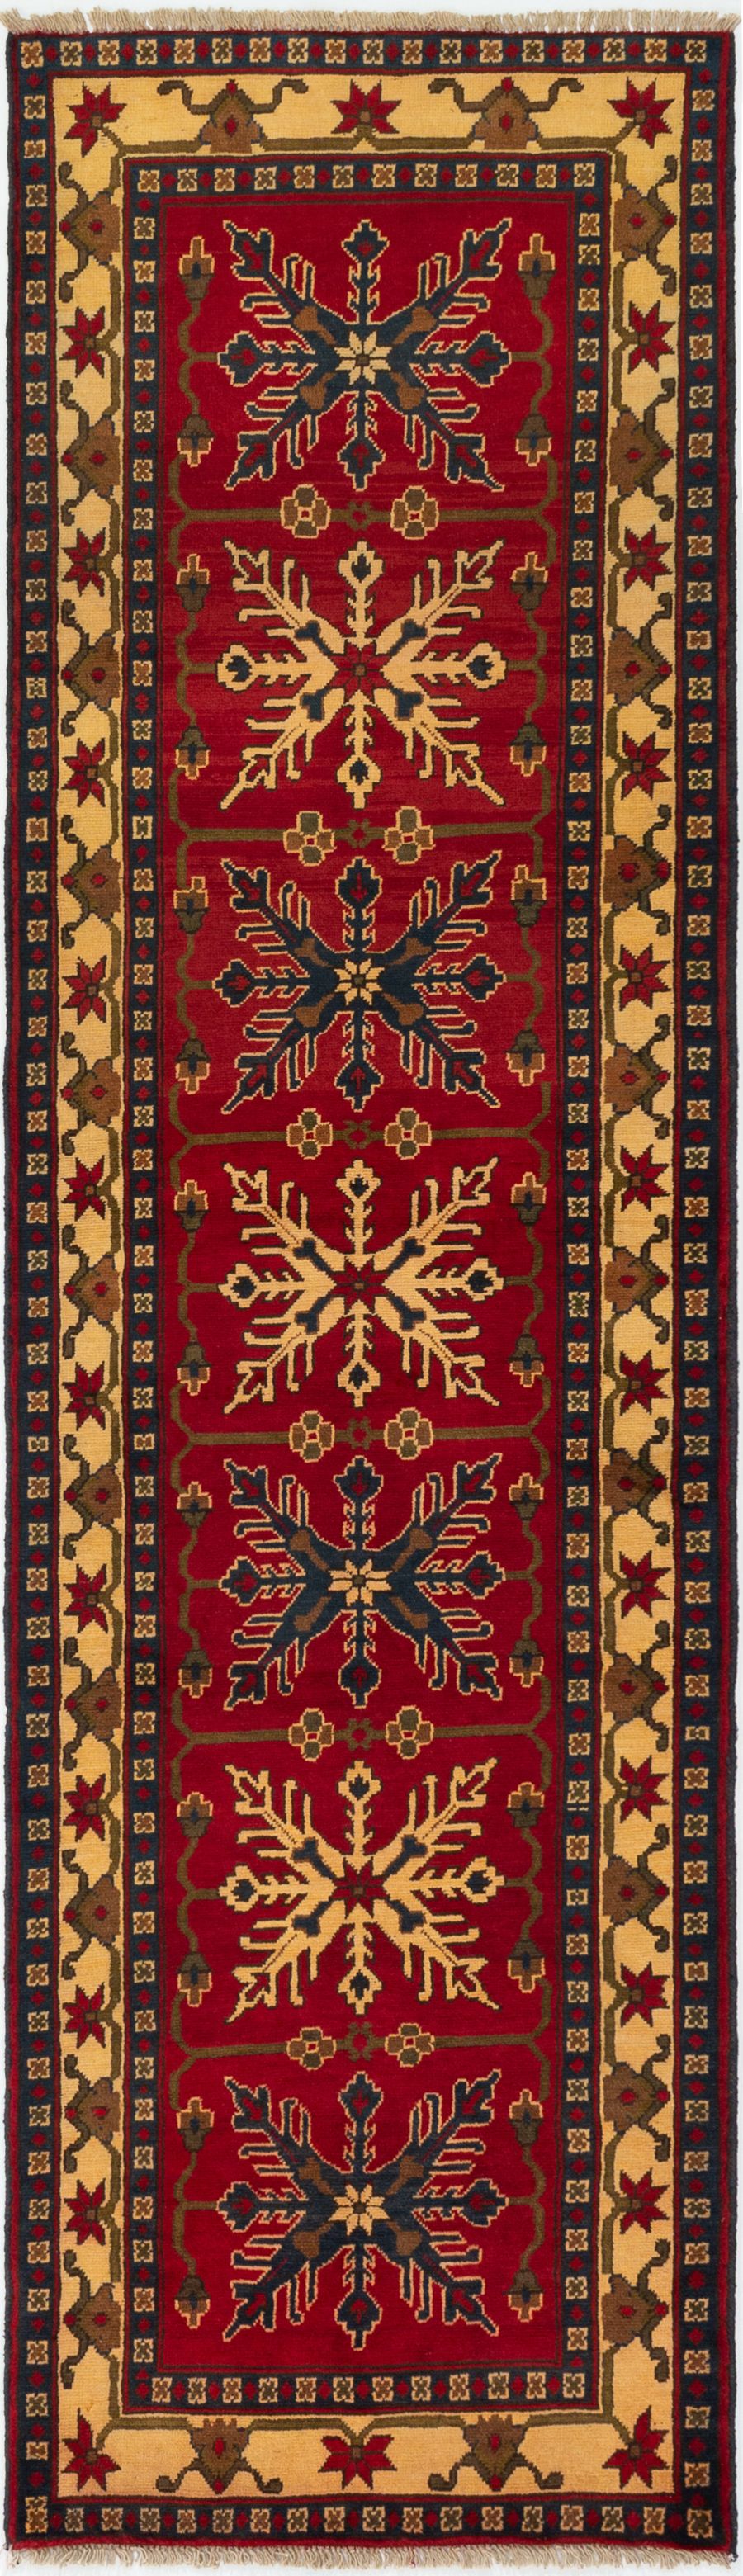 Hand-knotted Finest Kargahi Dark Red Wool Rug 2'8" x 9'6" Size: 2'8" x 9'6"  